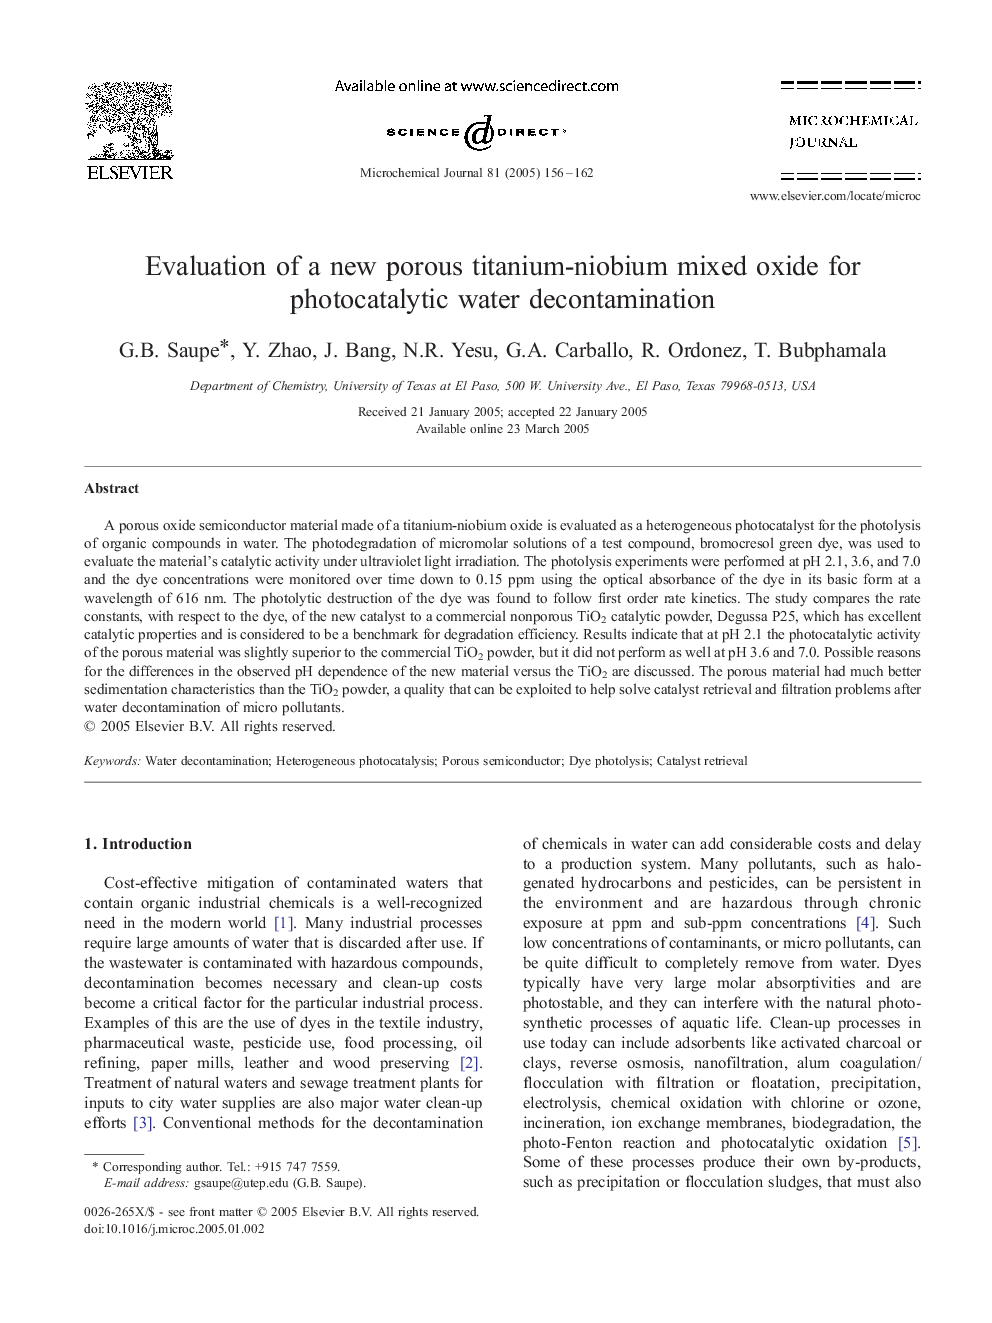 Evaluation of a new porous titanium-niobium mixed oxide for photocatalytic water decontamination